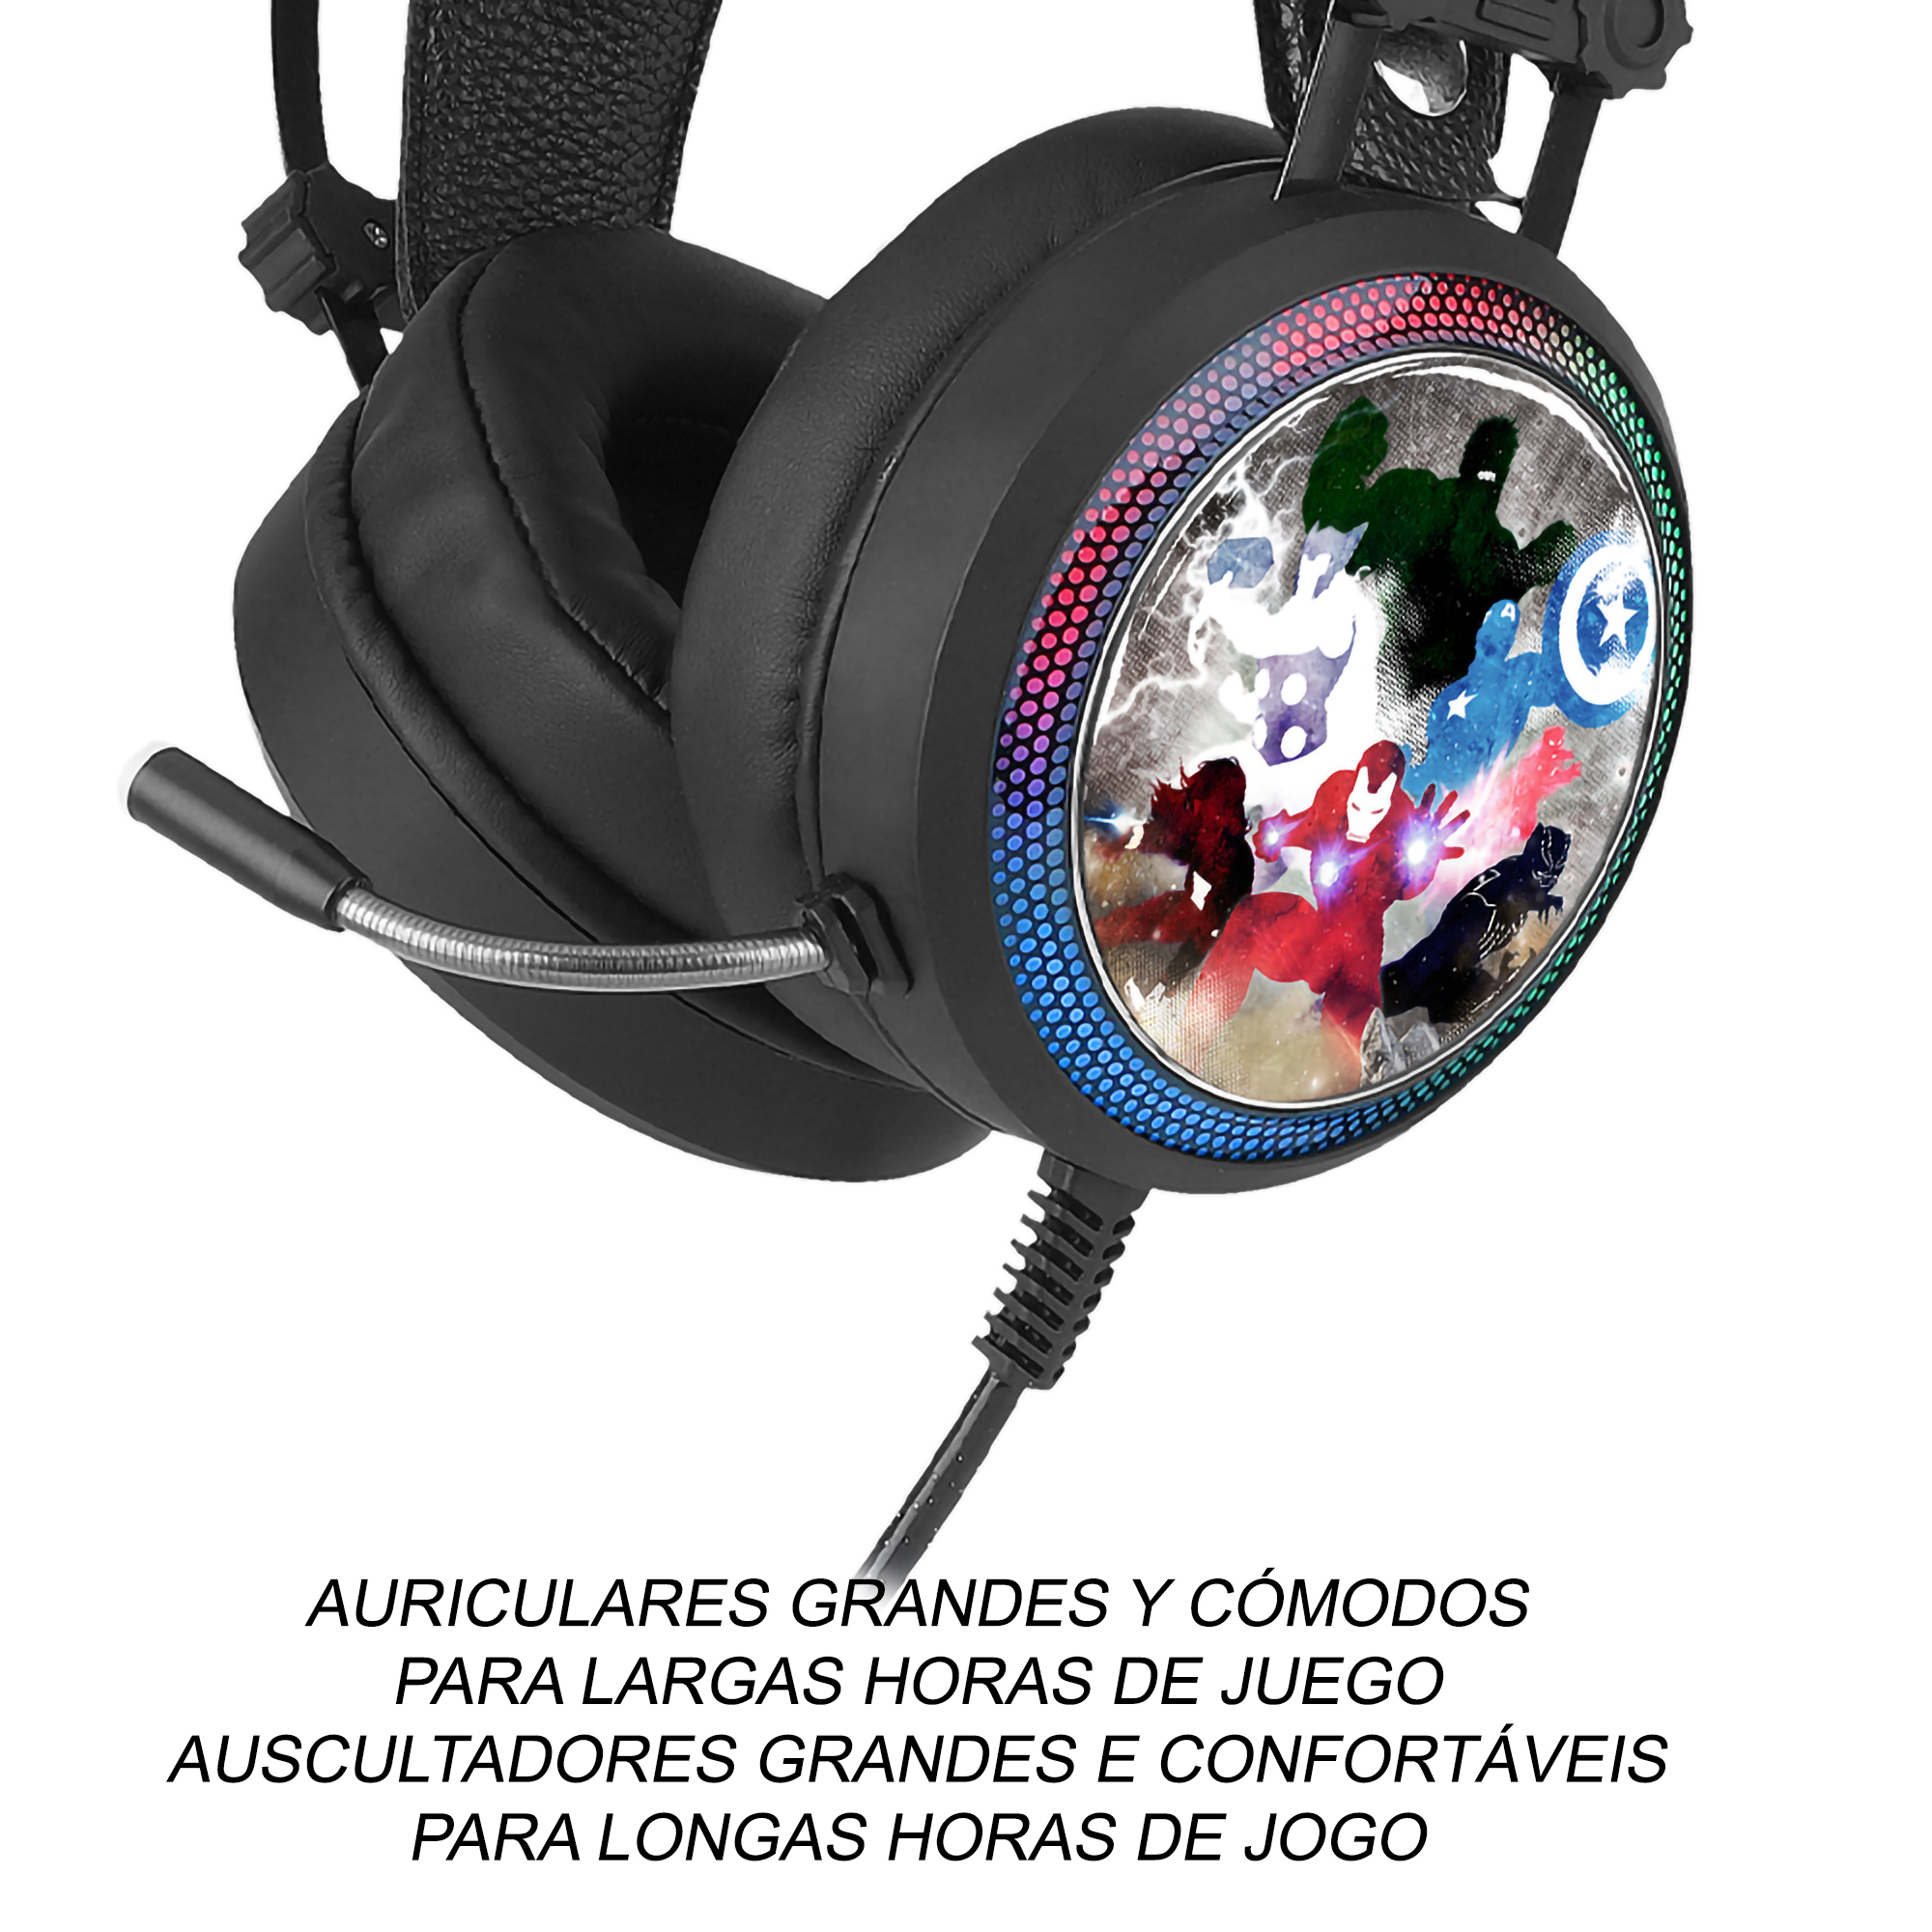 Headphones Gaming Com Microfone Marvel Avengers 002/ Usb